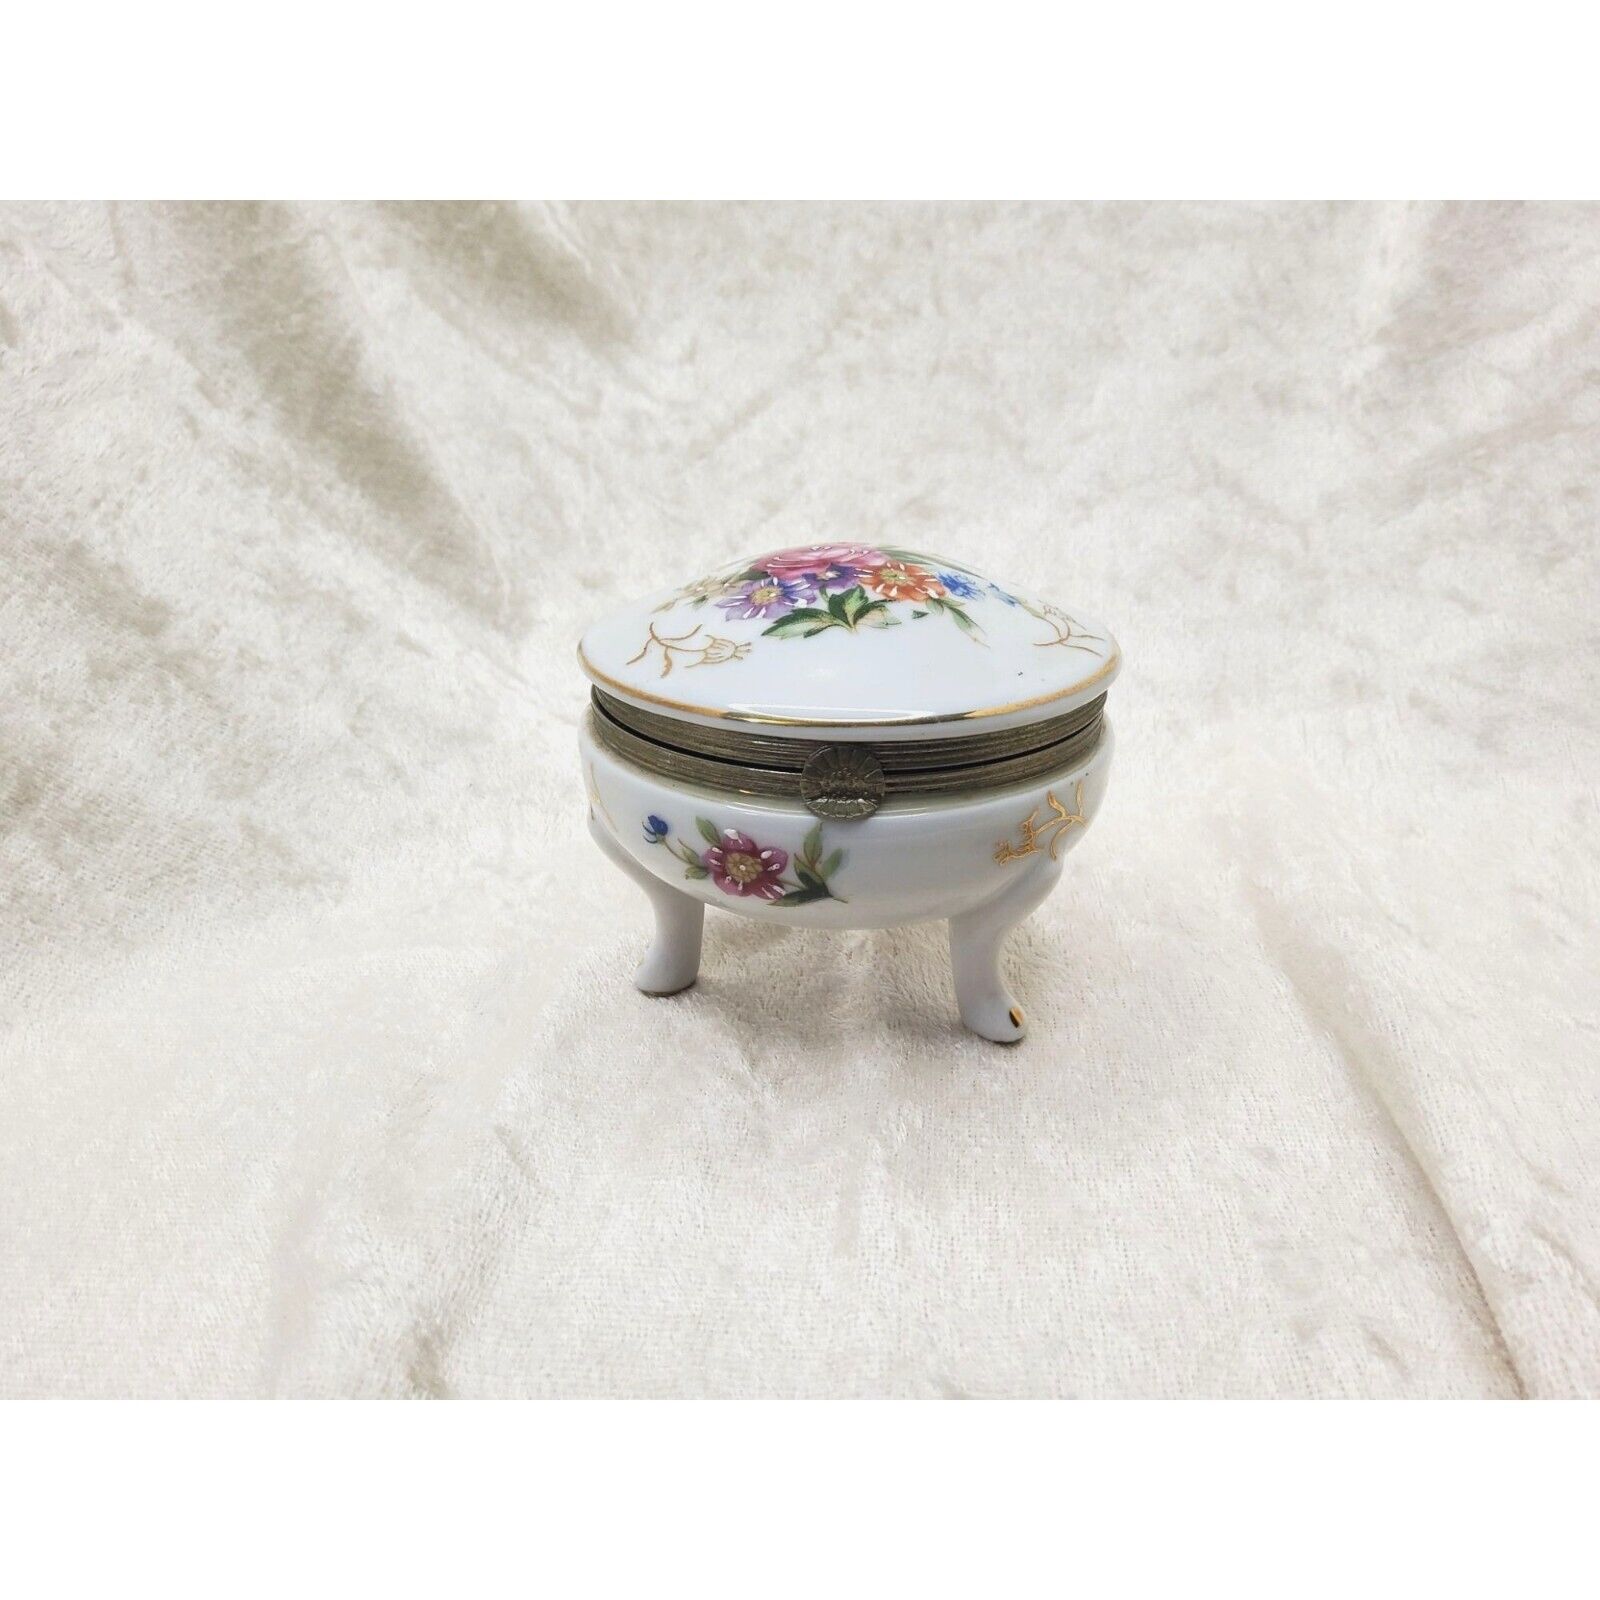 vintage napcoware japan porcelain floral footed trinket/jewelry box